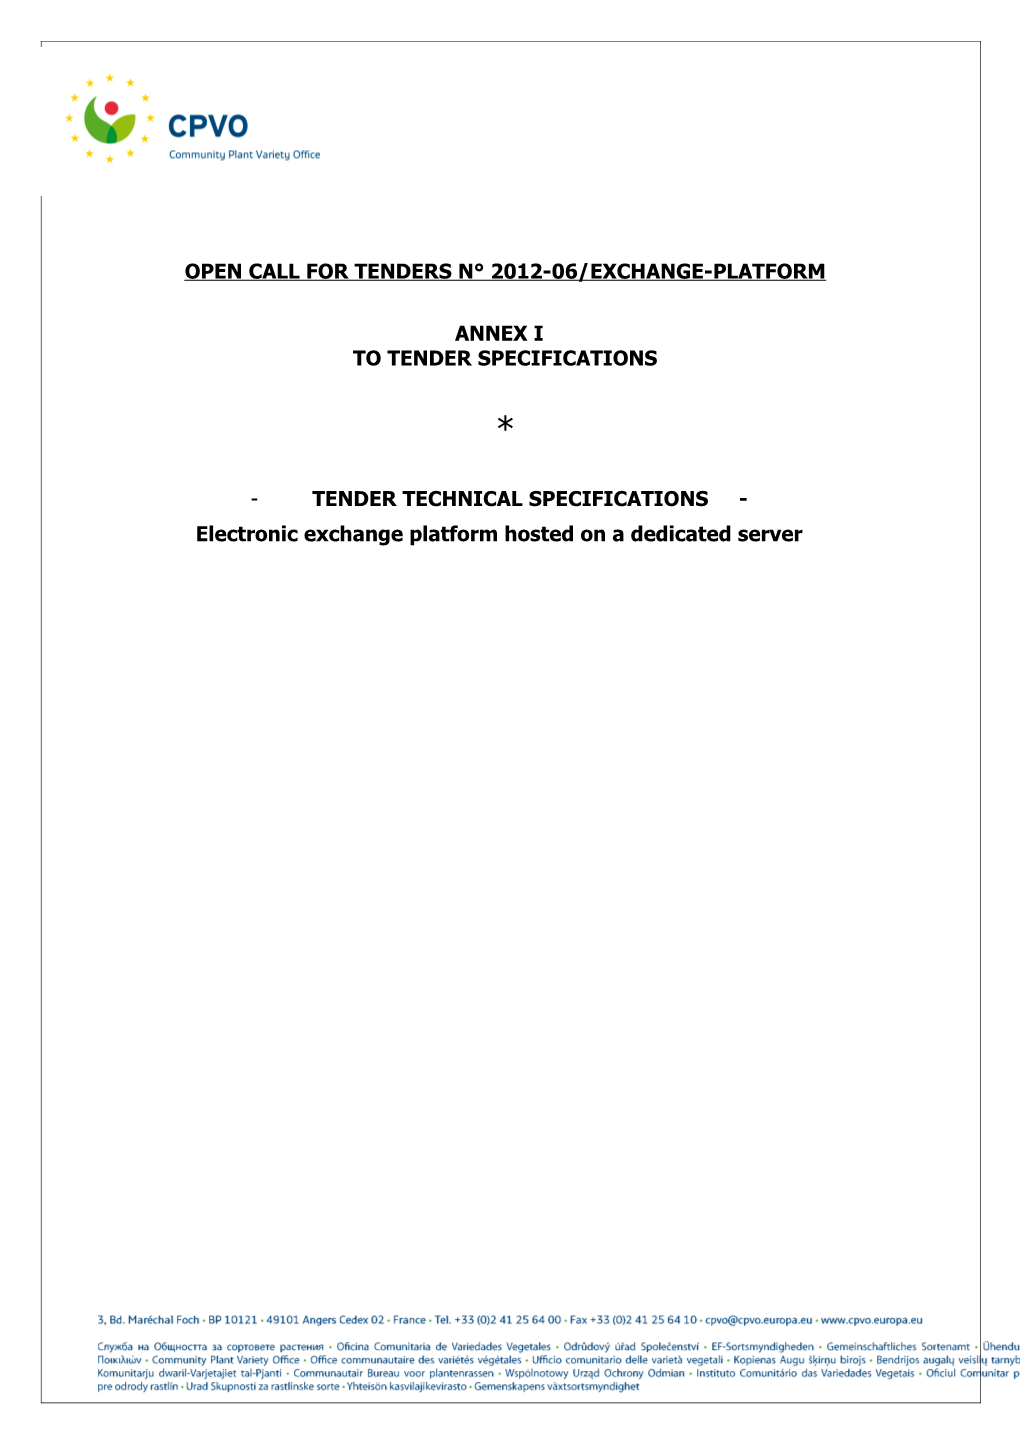 Open Call for Tenders N 2012-06/Exchange-Platform